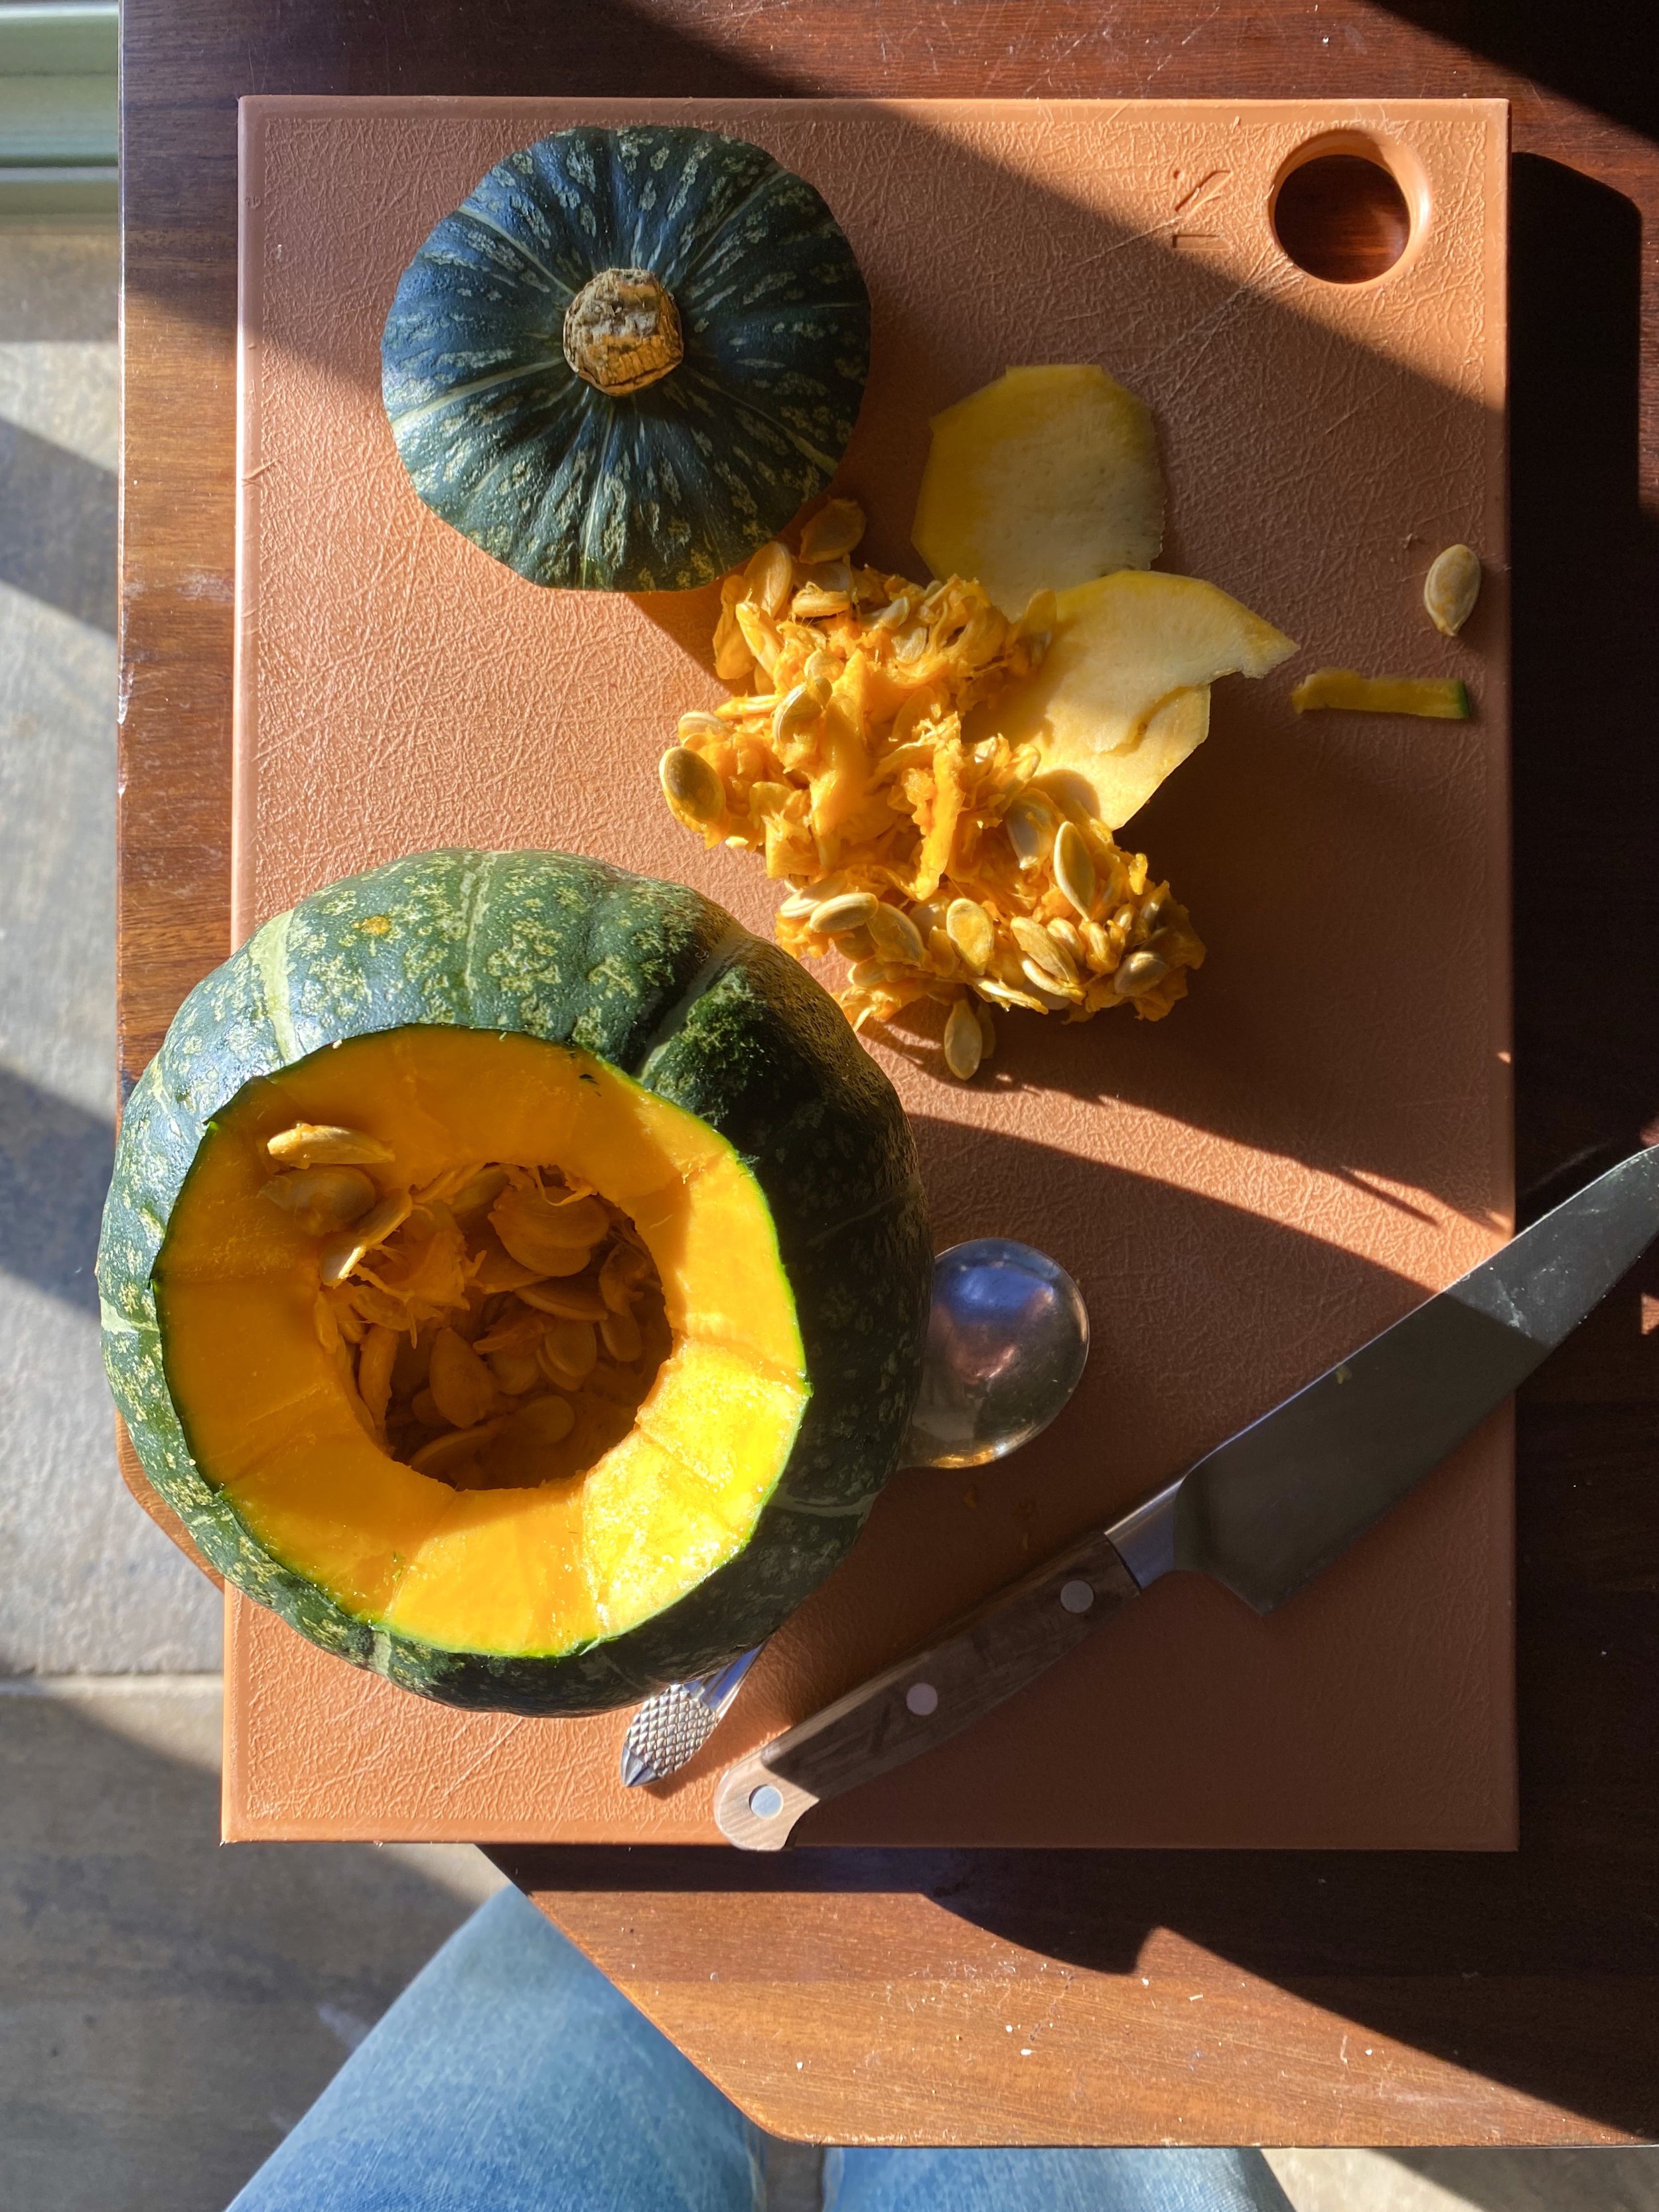 Pumpkin fondue in the making